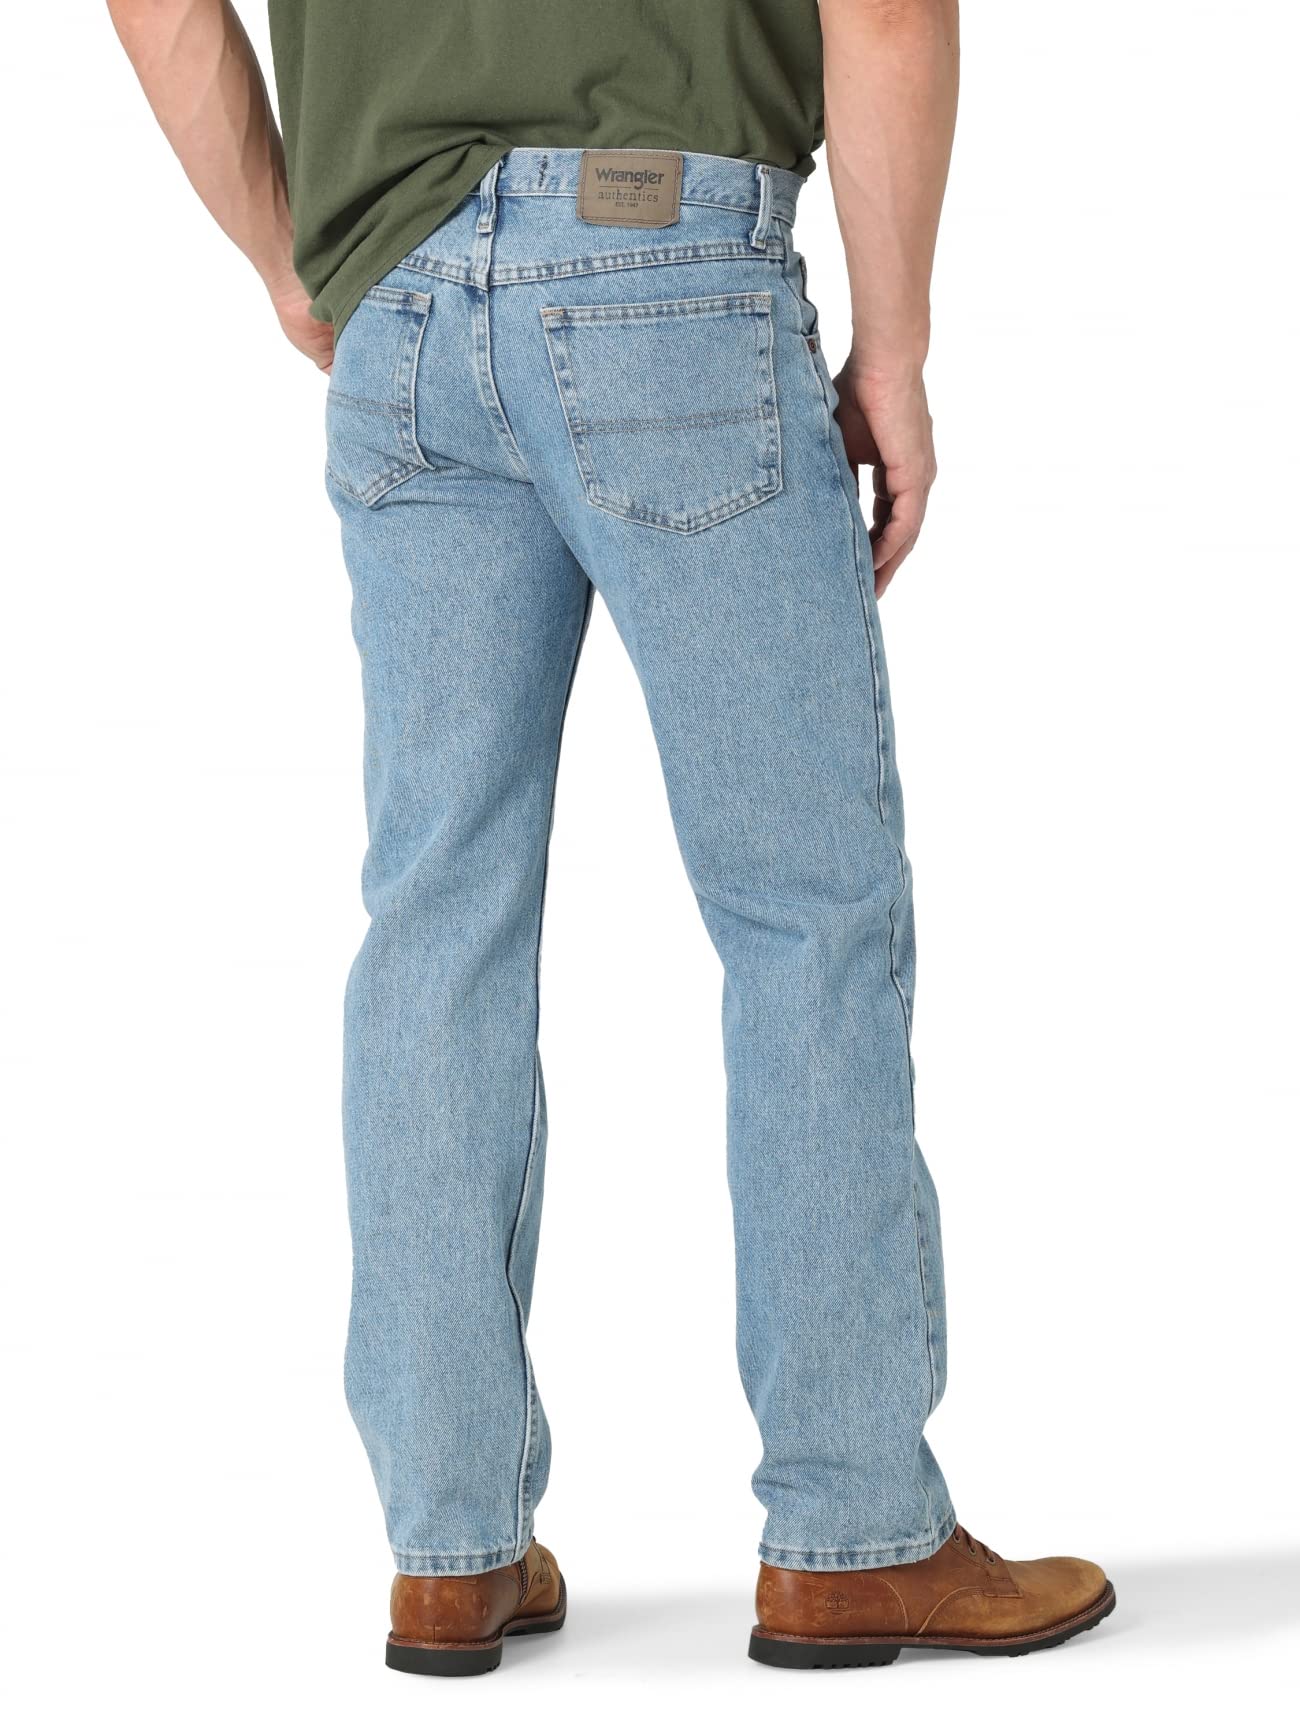 Wrangler Authentics Men's Classic 5-Pocket Regular Fit Cotton Jean, Light Stonewash, 36W x 29L